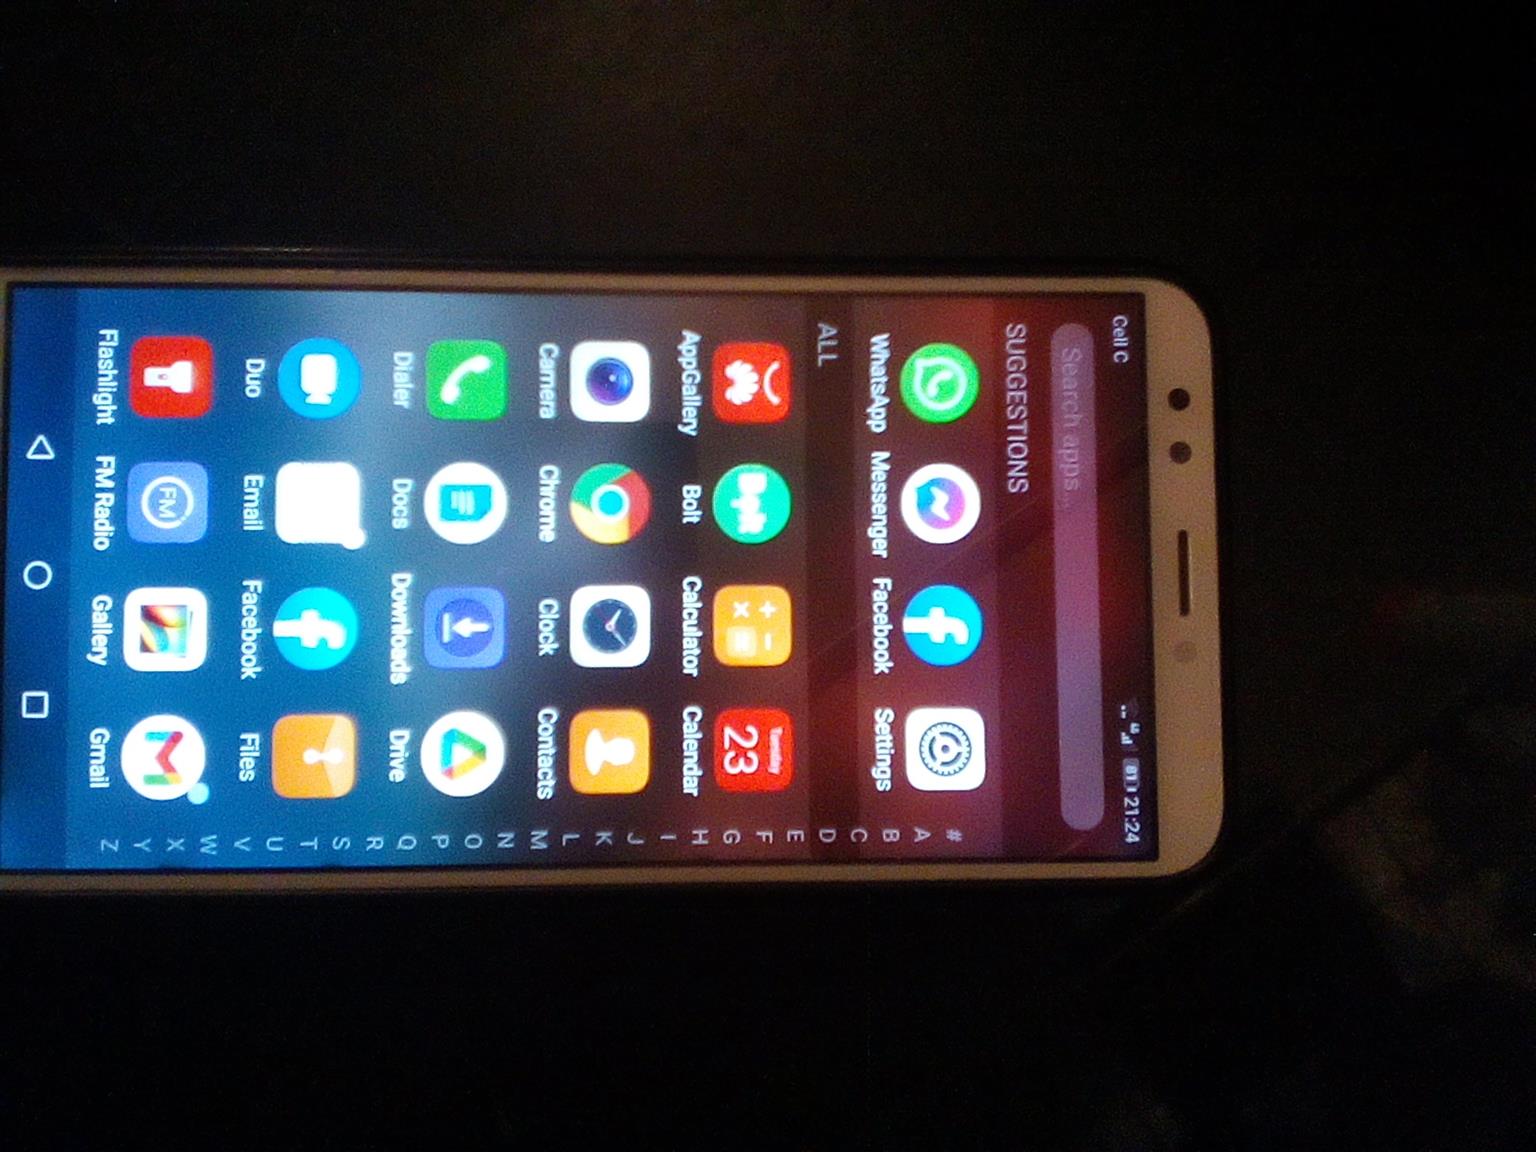 Huawei phone Y7 original box with sim remover keyer